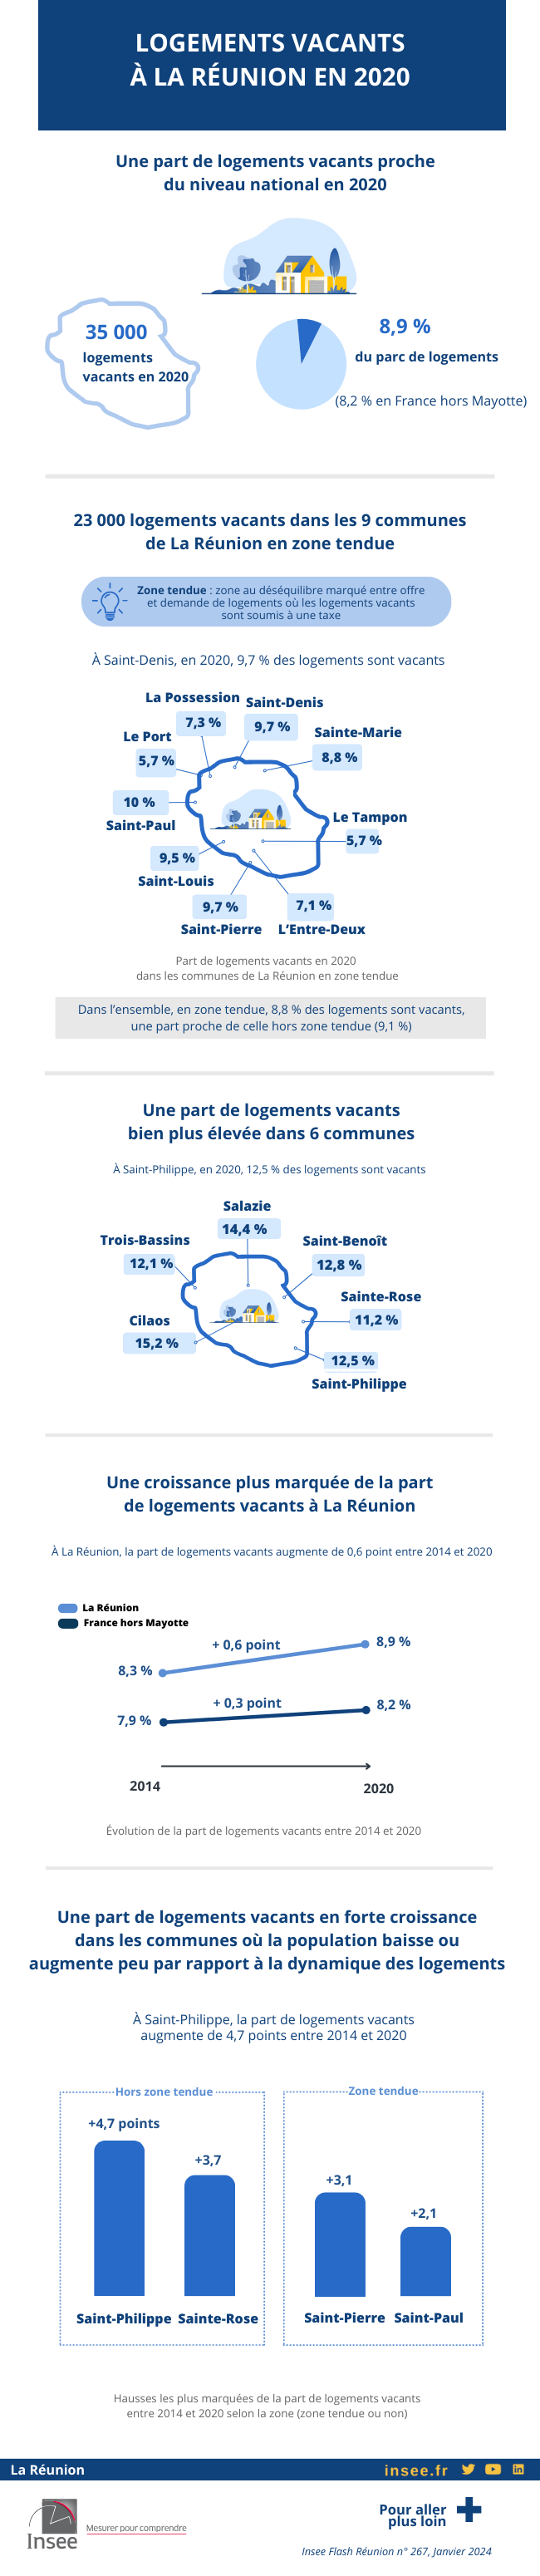 Logements vacants à La Réunion en 2020